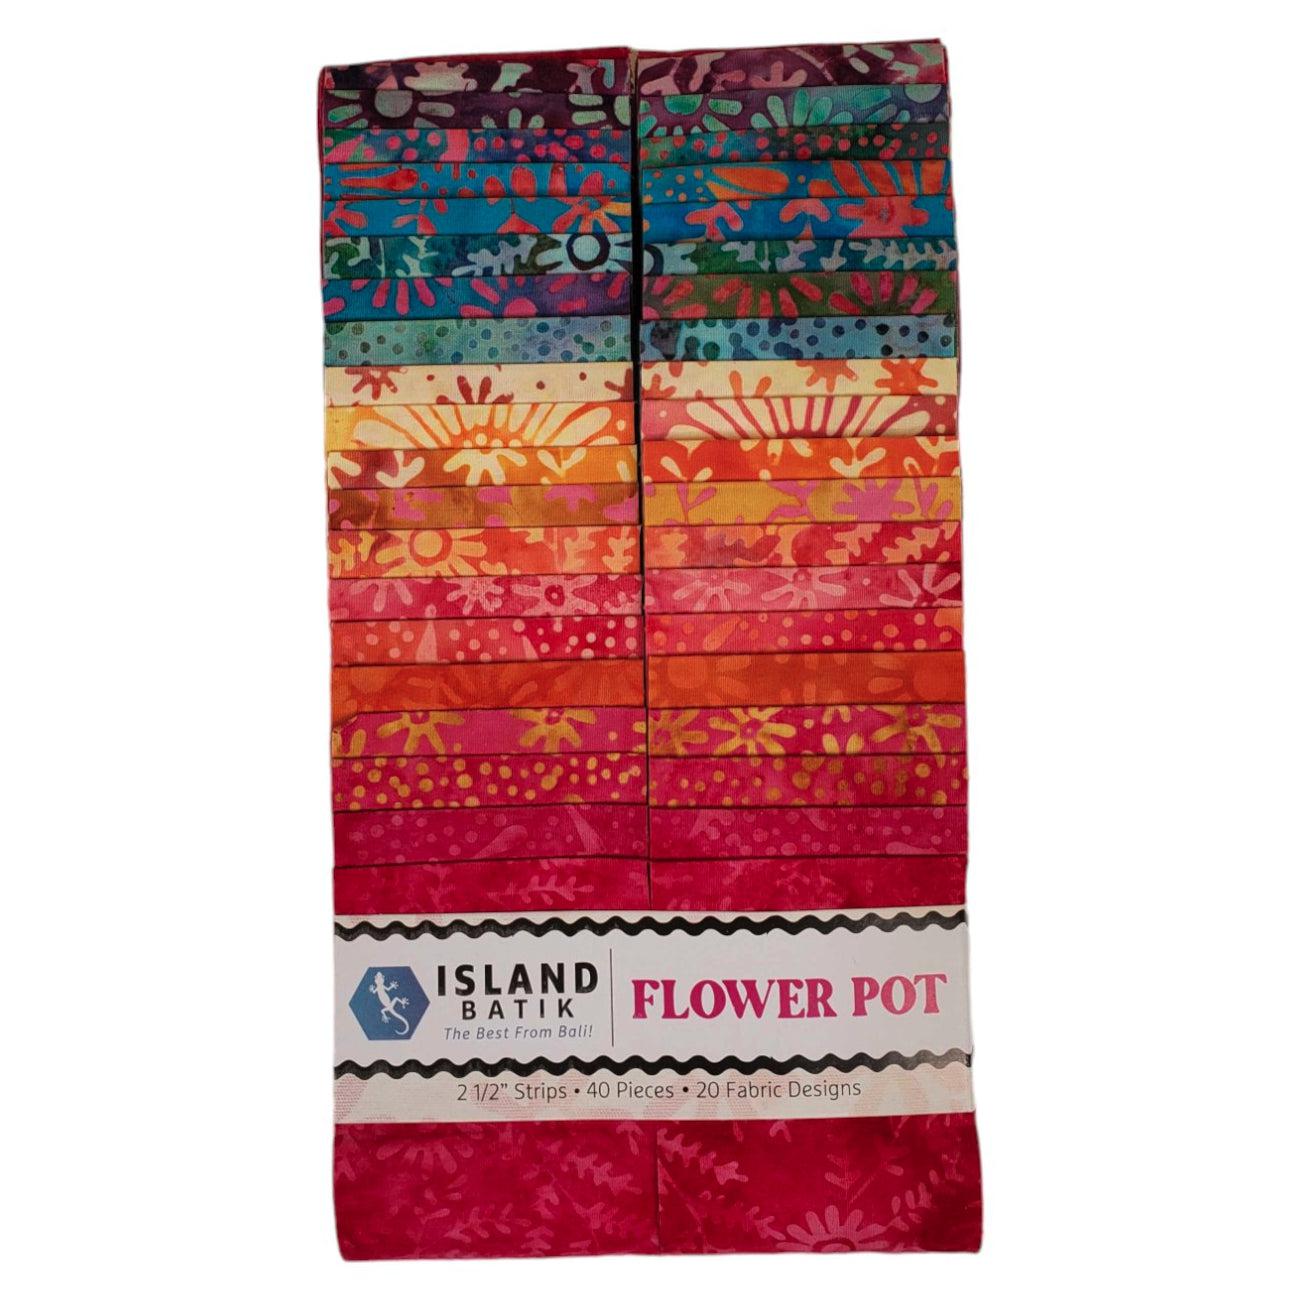 Flower Pot Batik 2 1/2" Strip Pack